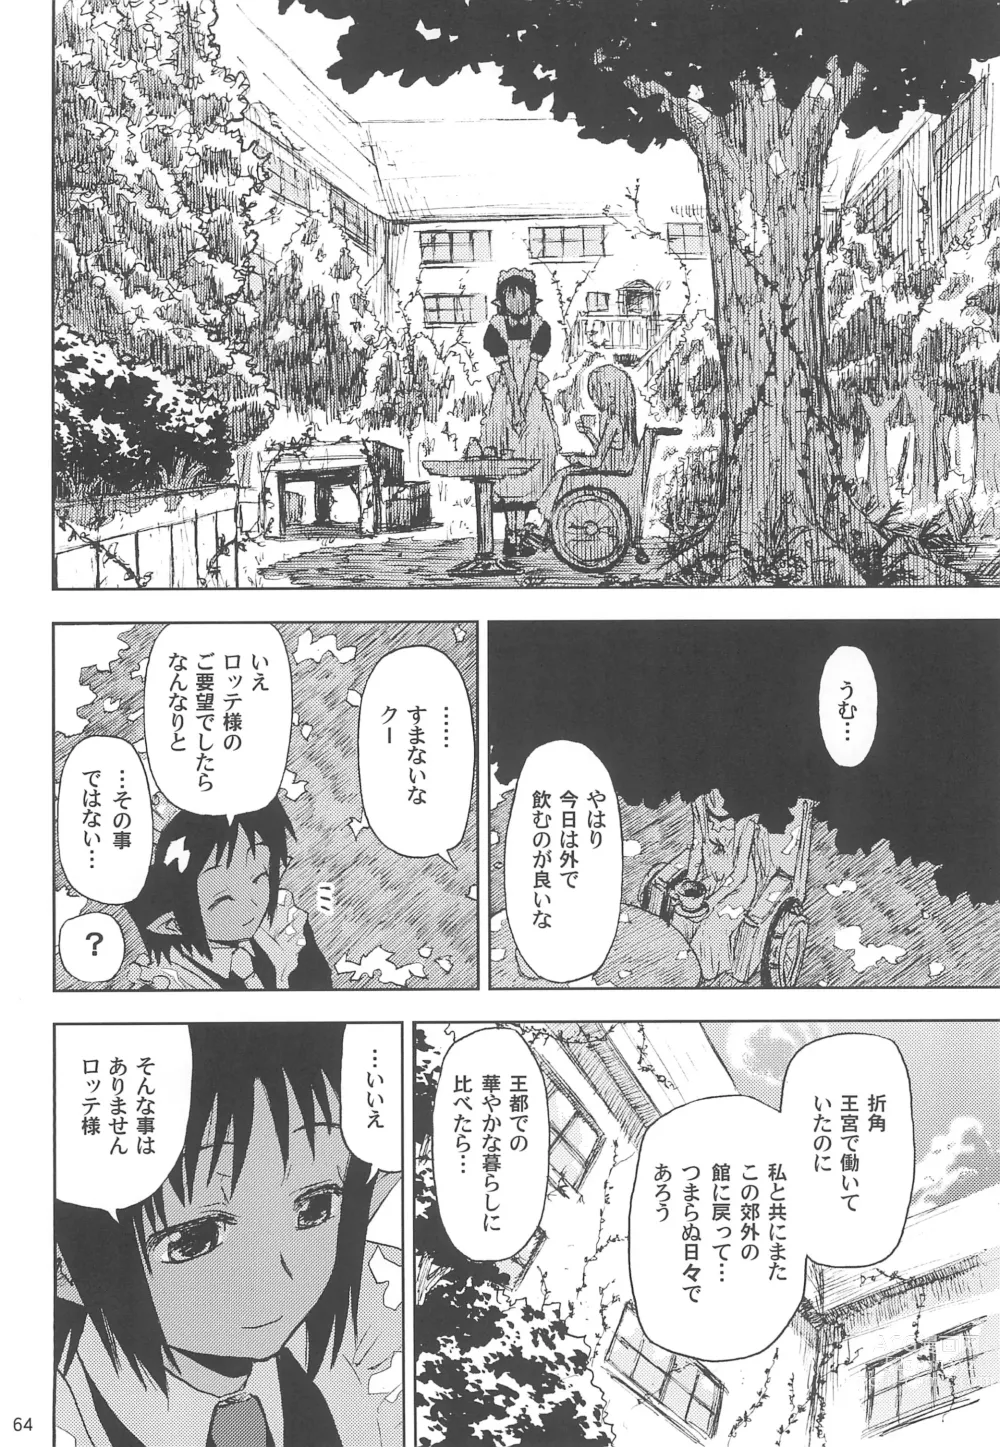 Page 64 of doujinshi Maigo no Maigo no Hime-sama Plus